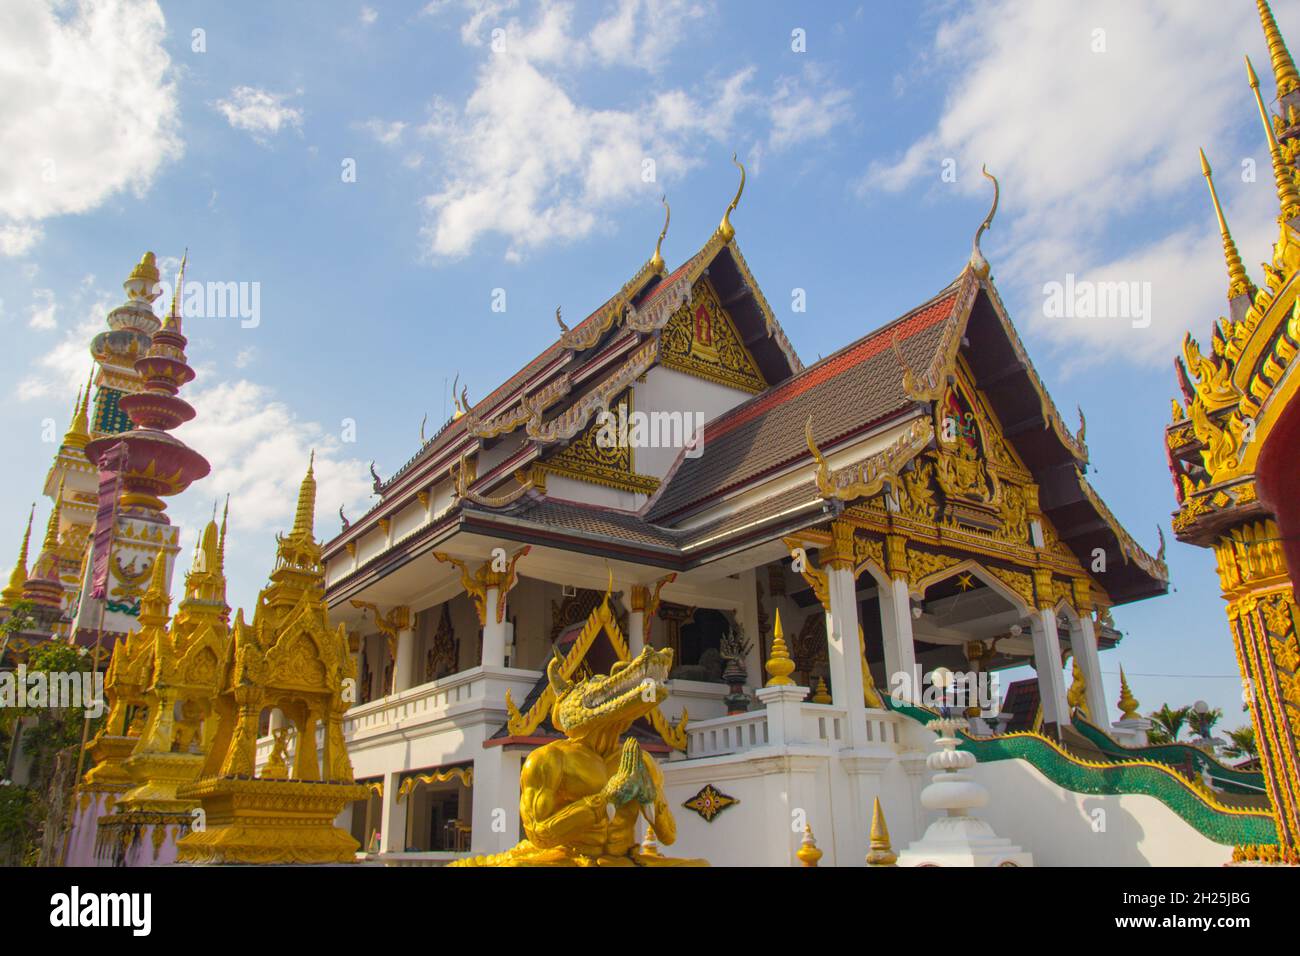 Thailand temples, churches, Buddhist art in Thailand Stock Photo - Alamy